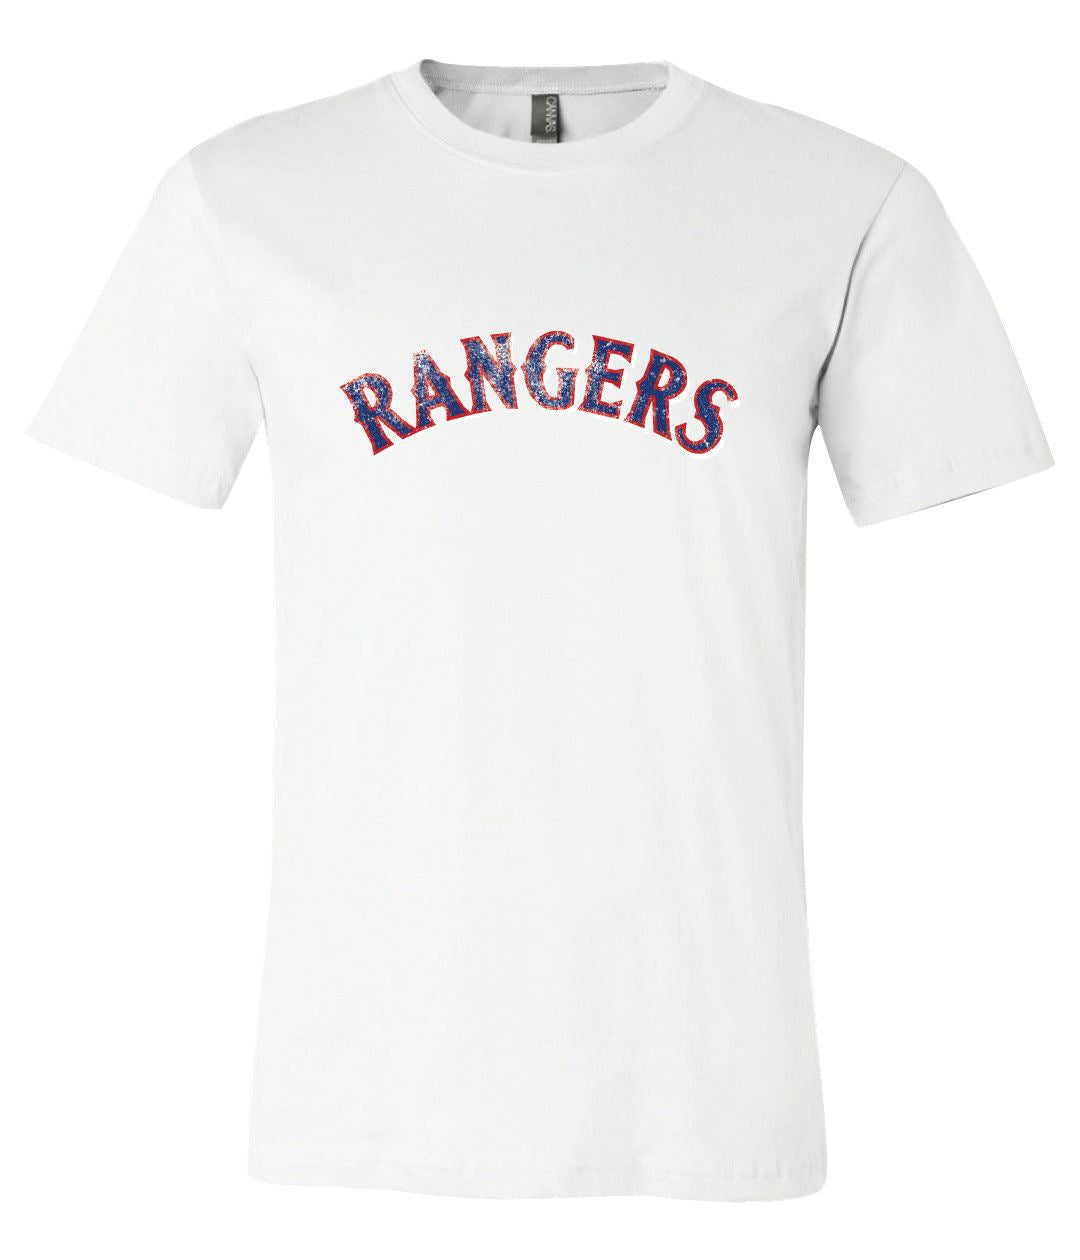 Texas Rangers Text logo Distressed Vintage logo T-shirt 6 Sizes S